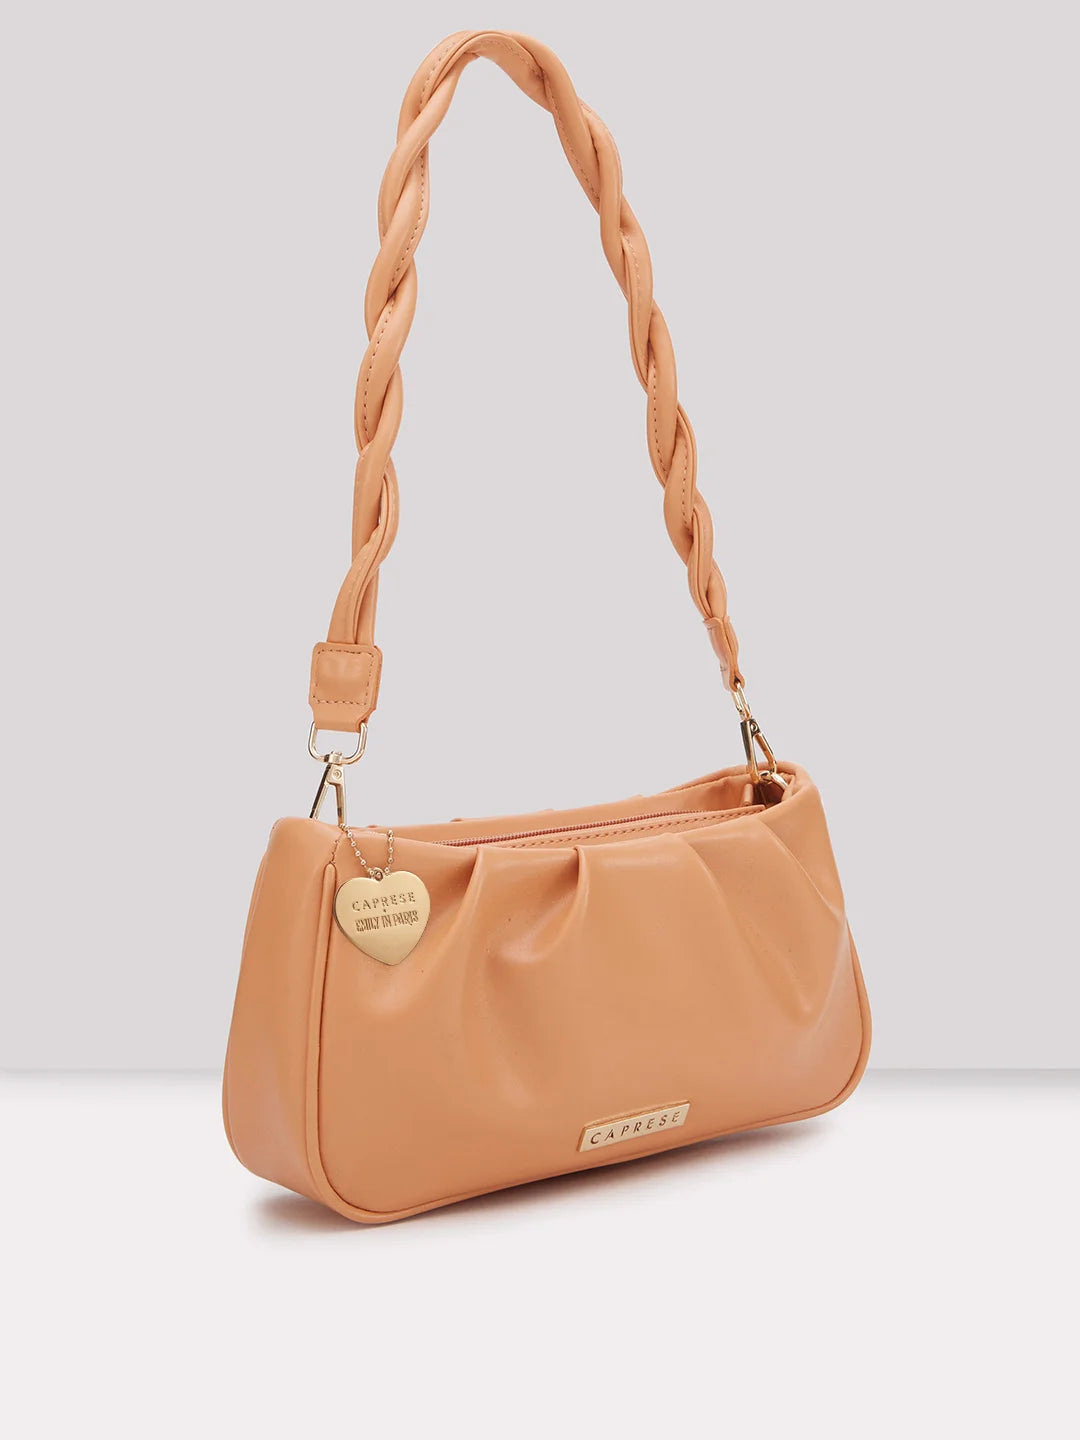 Caprese Emily in Paris Solid Medium Sling Handbag